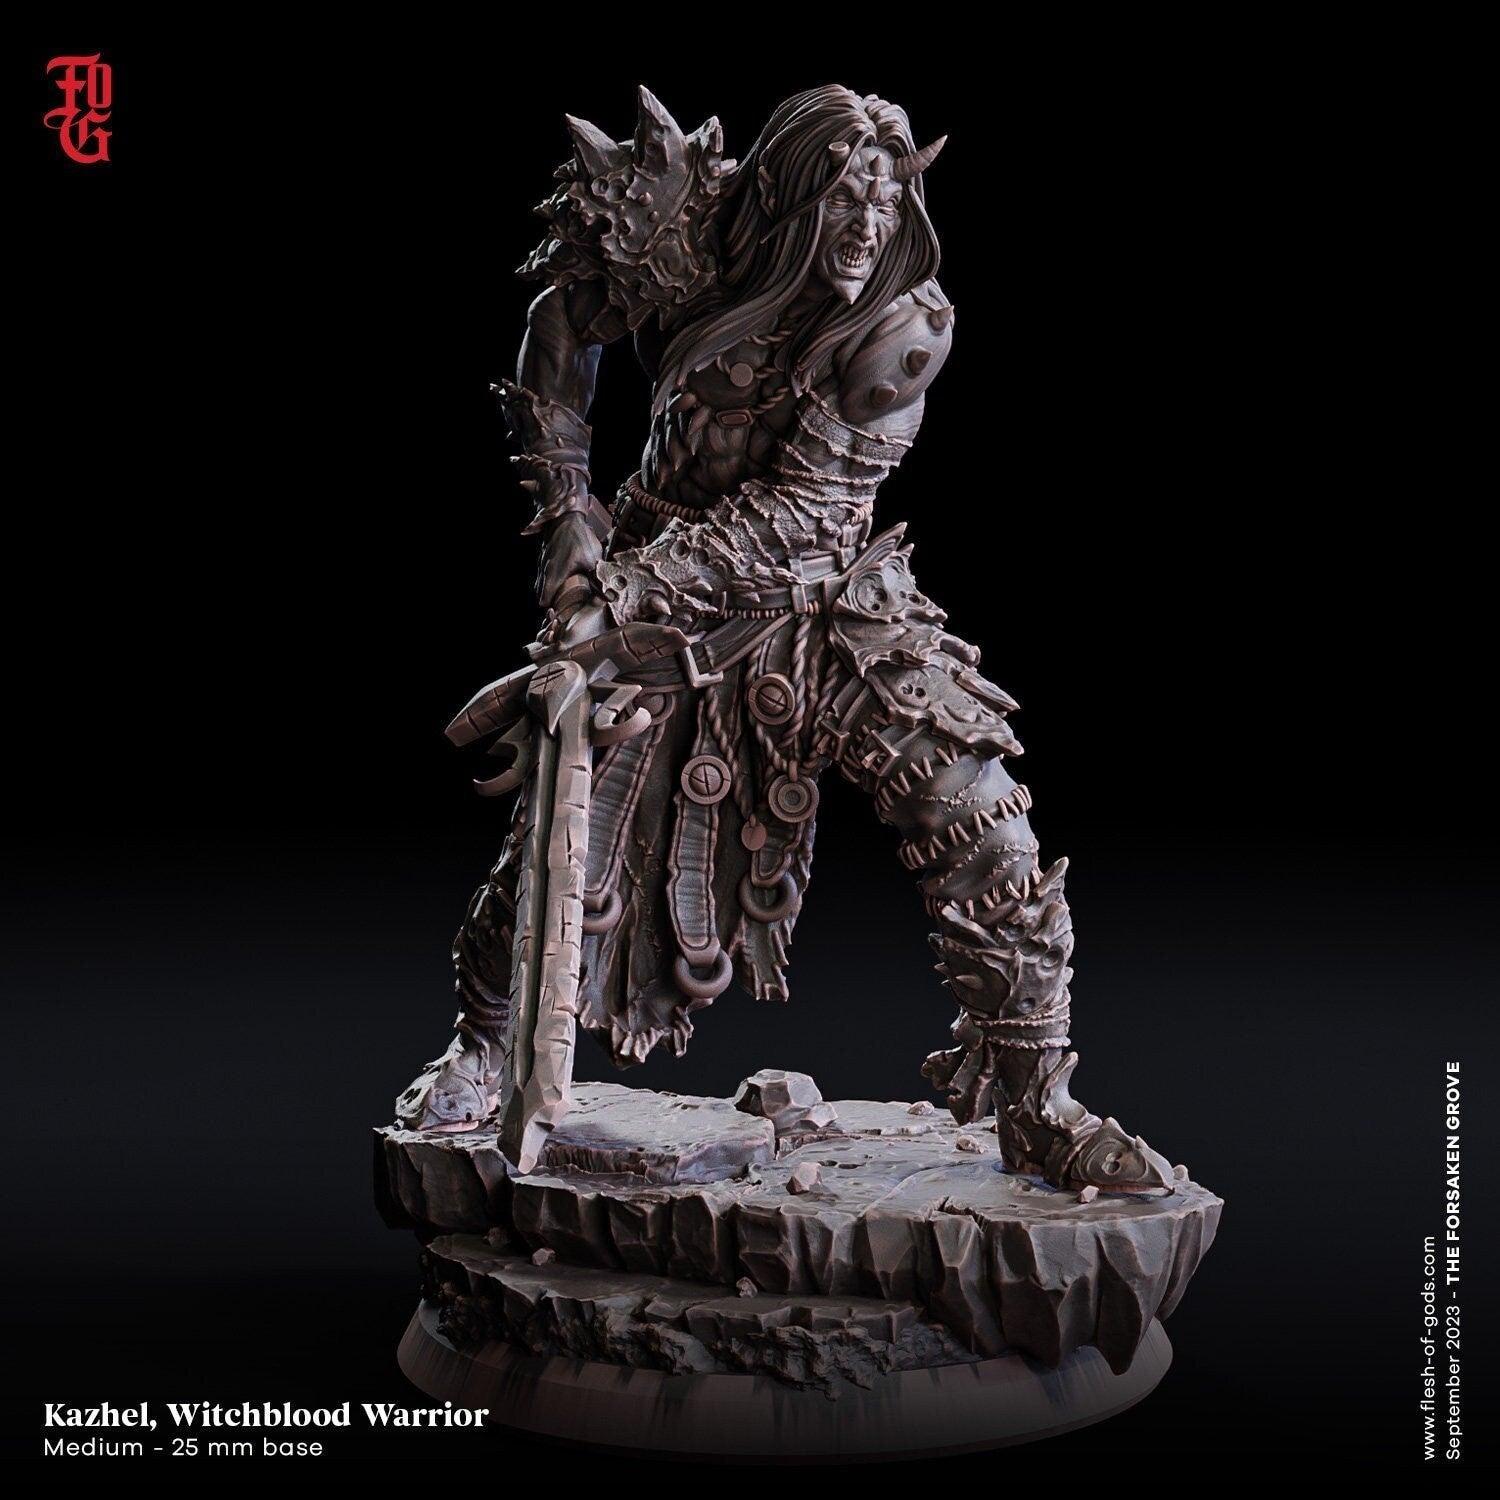 DnD Witchblood Warrior Statue Bust | 25mm Base 75mm Scale Bust | DnD Miniature Dungeons and Dragons DnD 5e Monster miniature Fighter - Plague Miniatures shop for DnD Miniatures